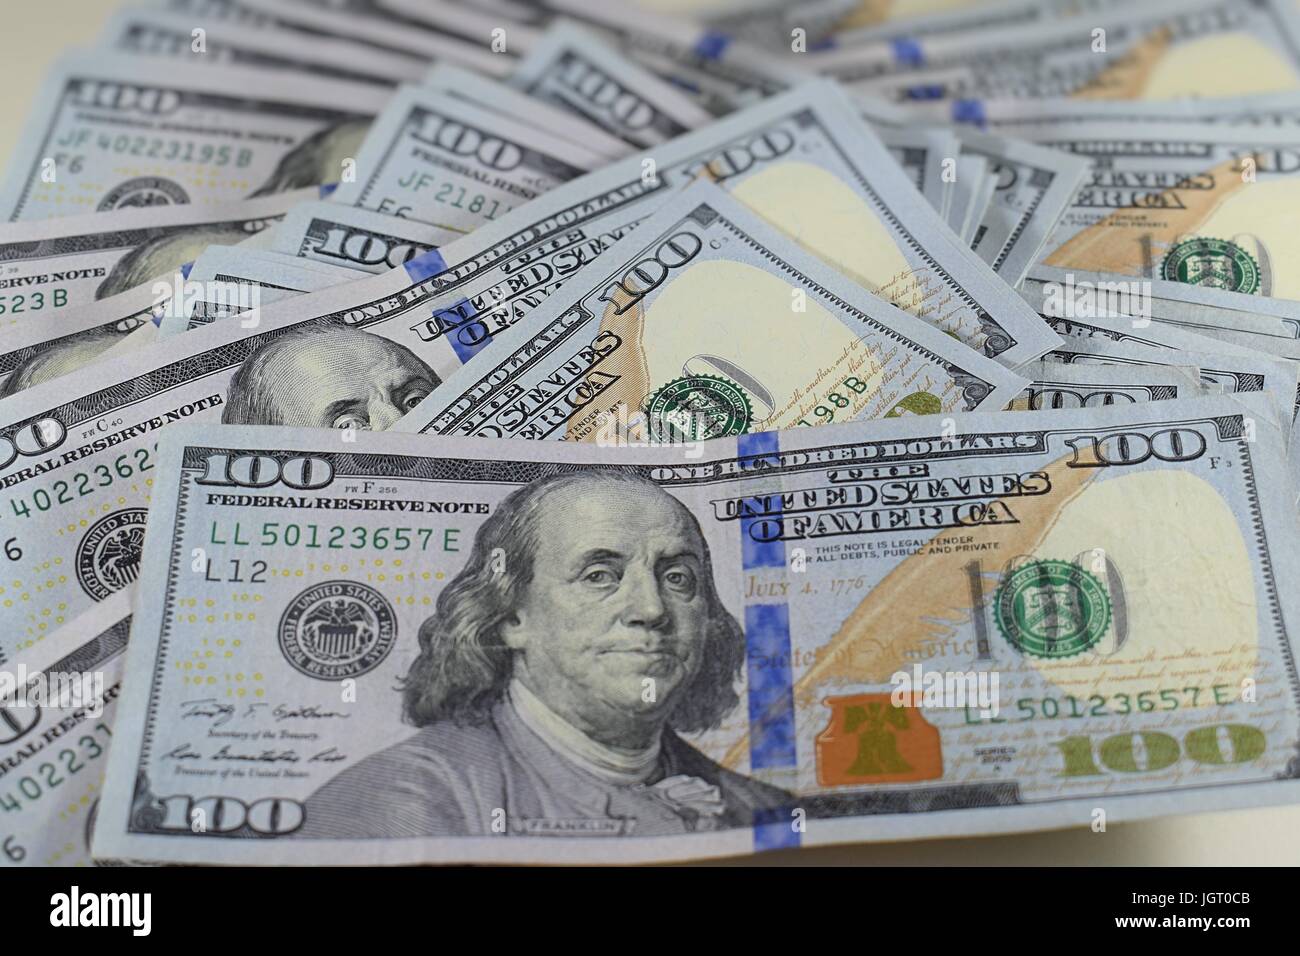 Messy pile of new hundred dollar bills American money $100 USD cash money that fill the frame Stock Photo